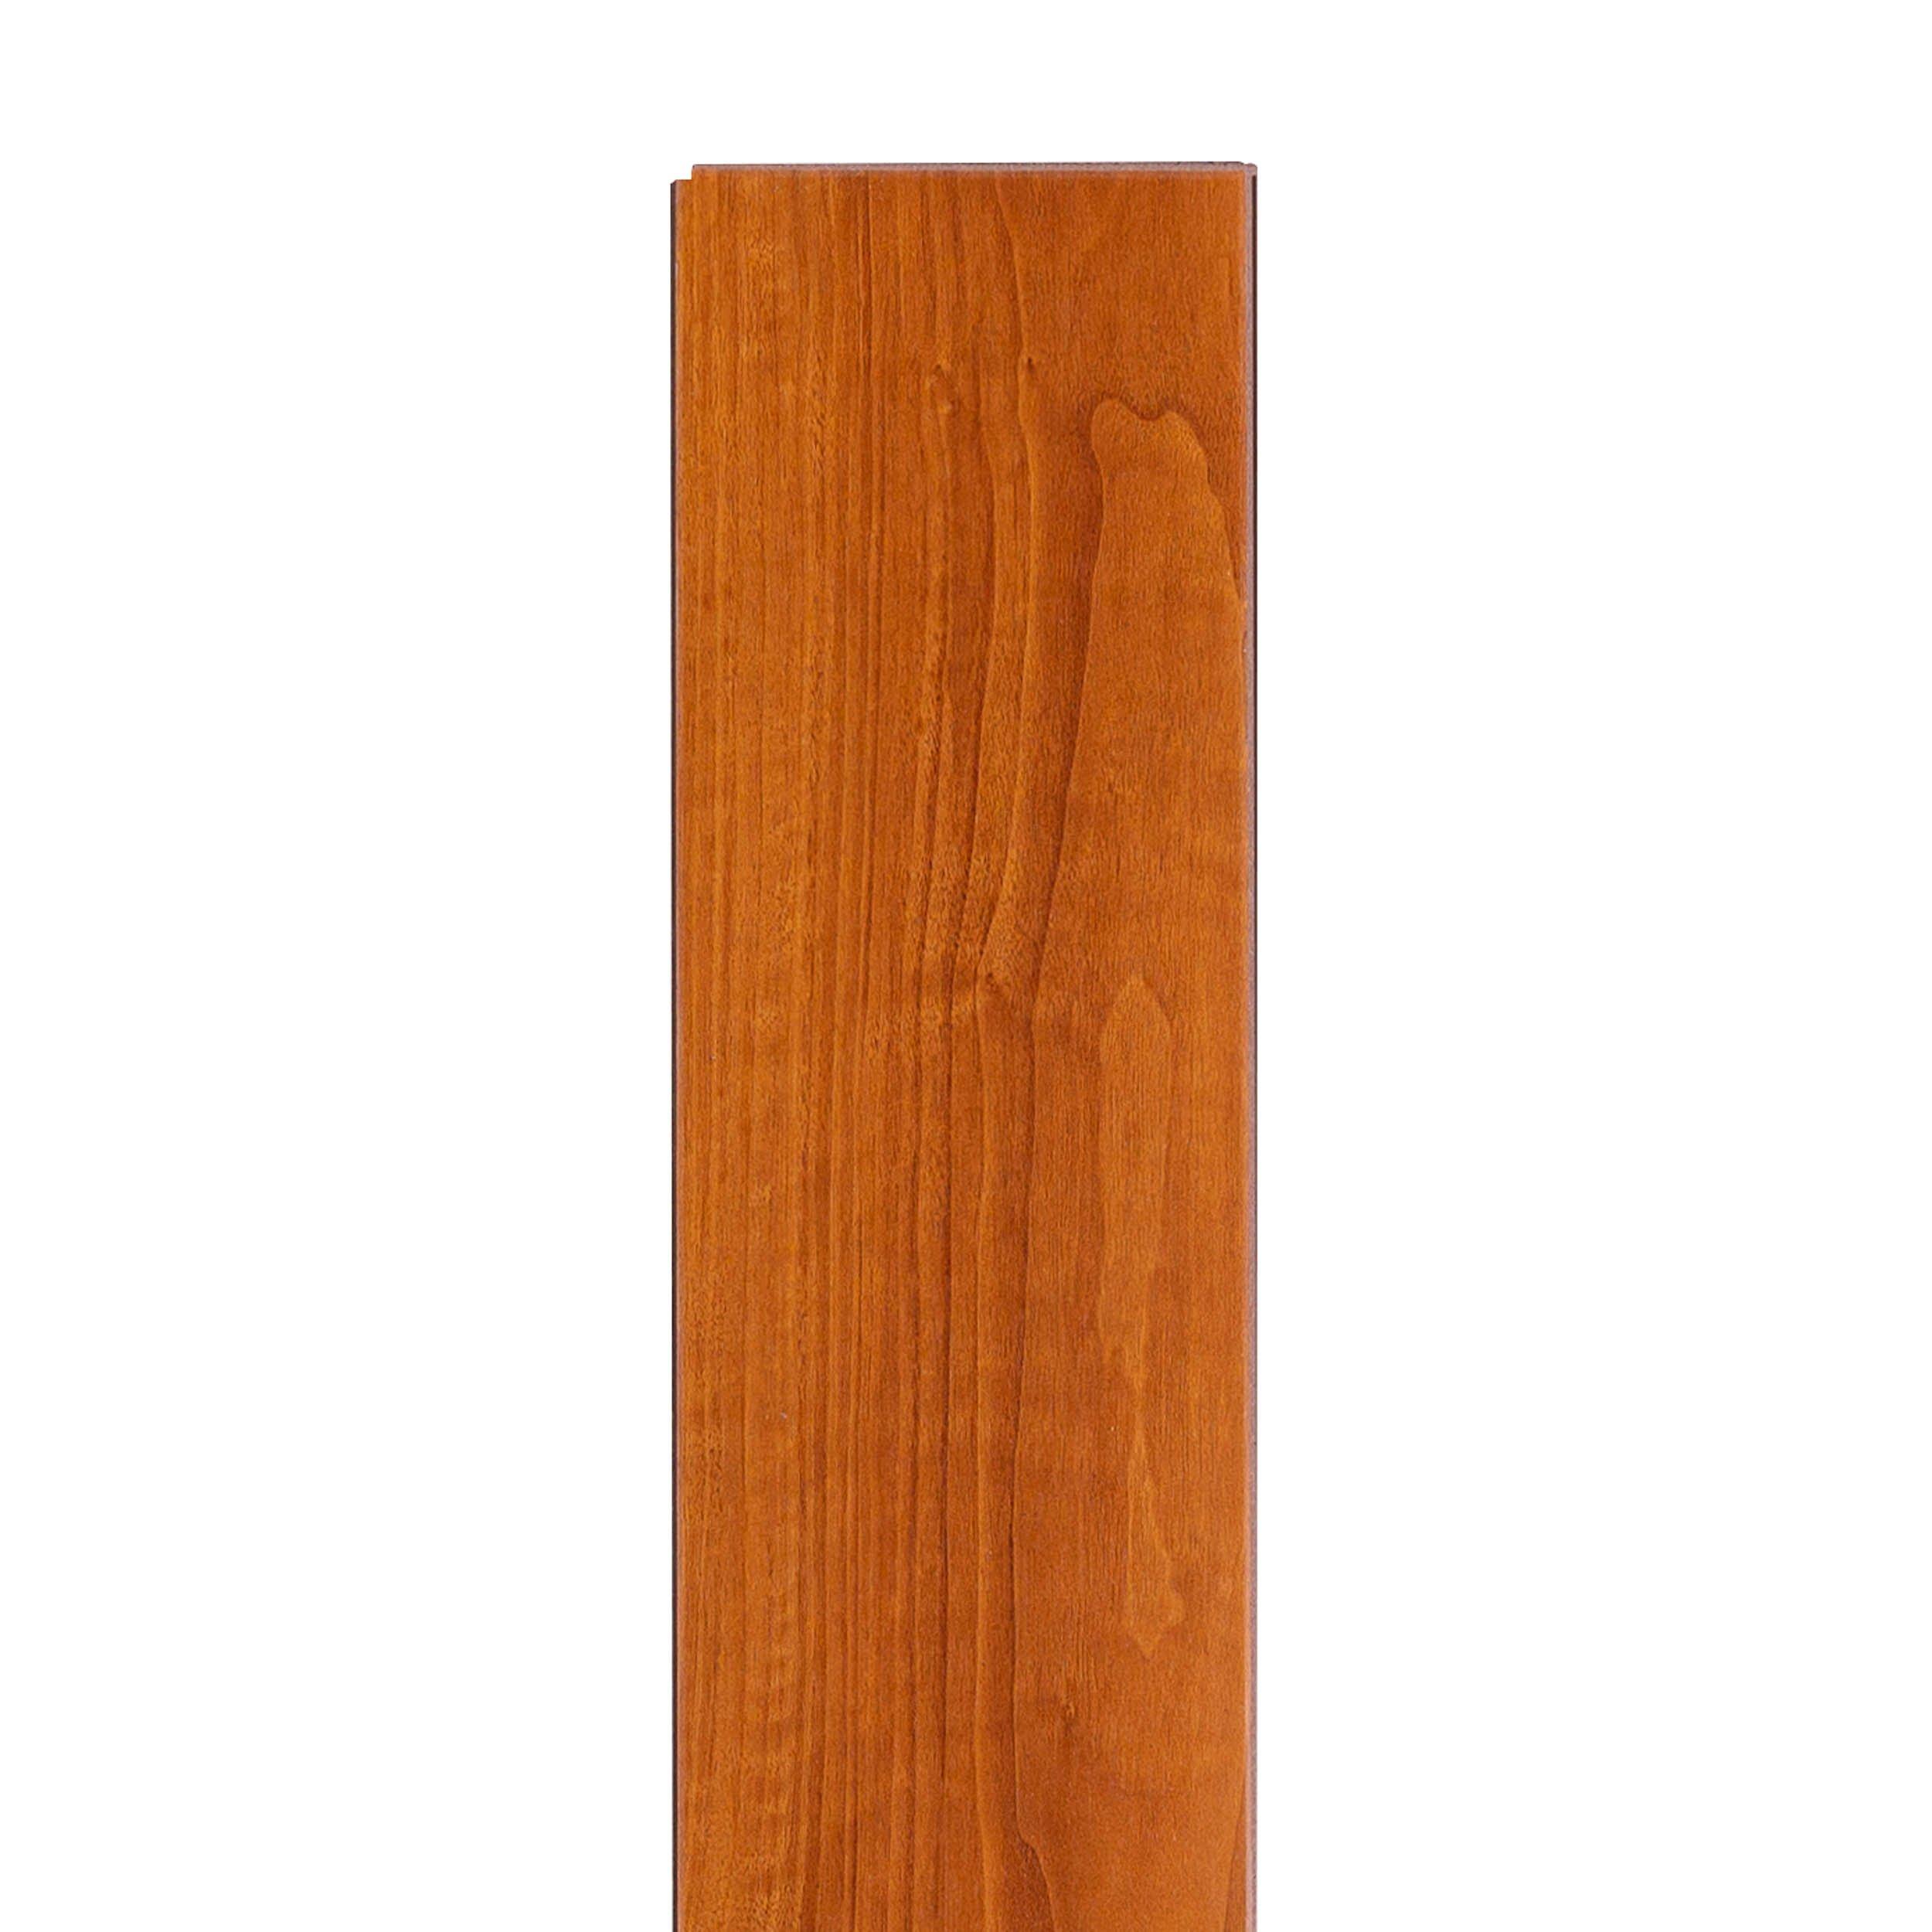 Adelino High Gloss Rigid Core Luxury Vinyl Plank - Cork Back